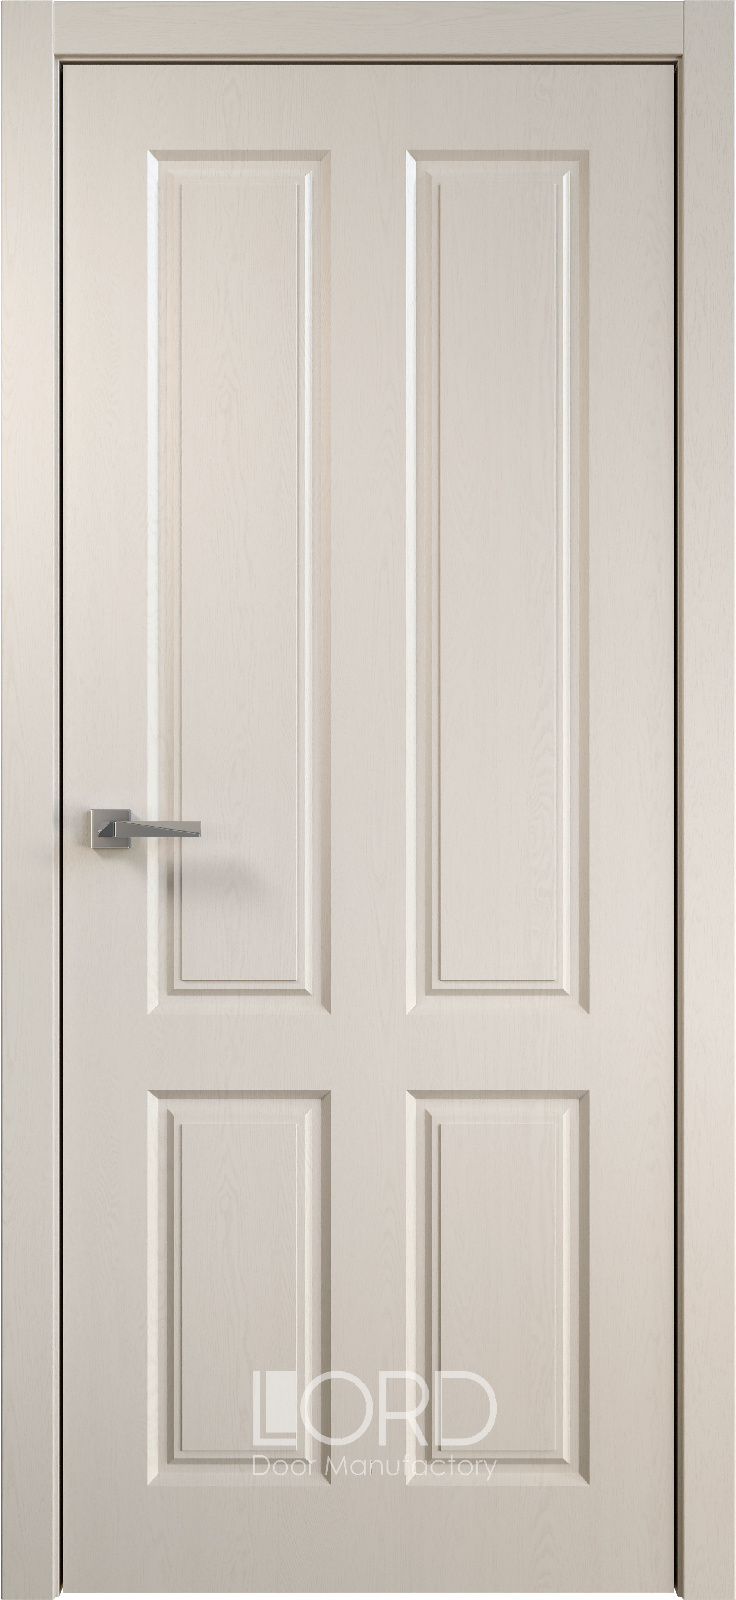 Лорд Межкомнатная дверь K 4 ДГ, арт. 22820 - фото №1